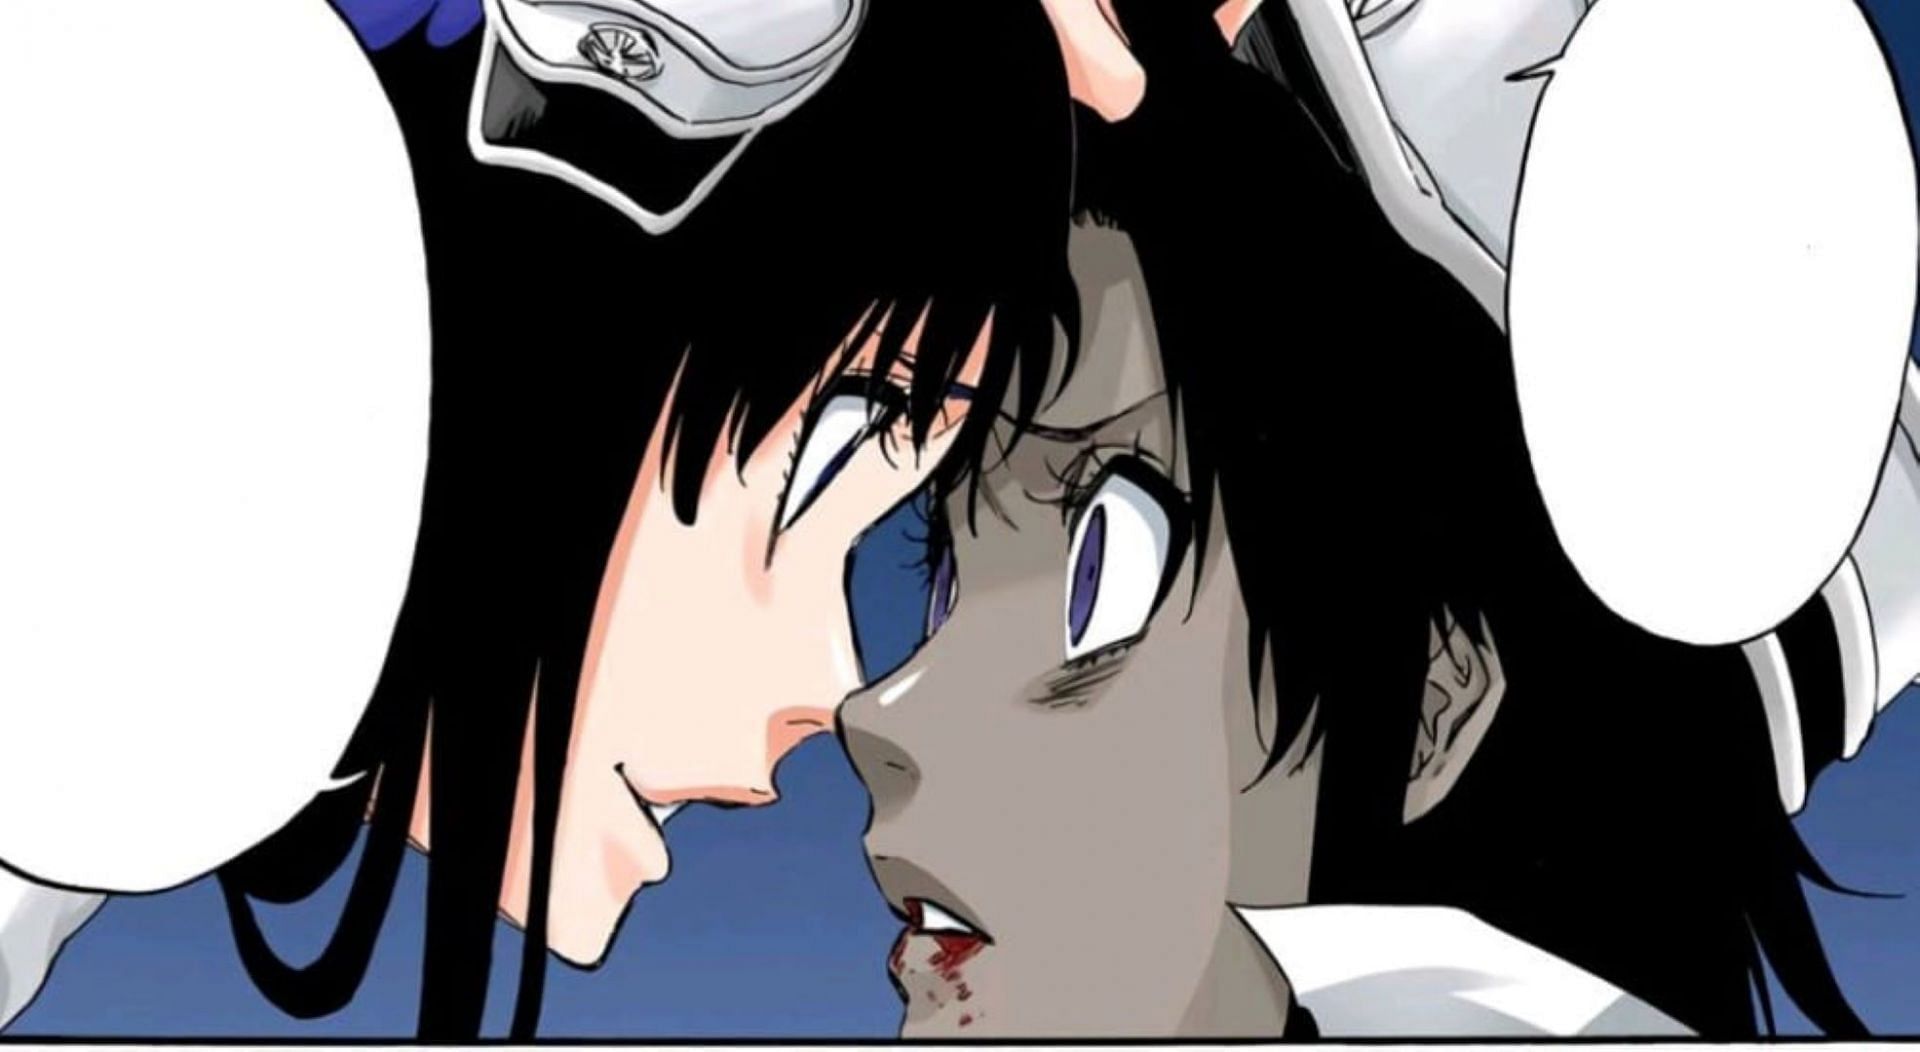 Giselle and Bambi as seen in the Bleach manga (Image via Tite Kubo)